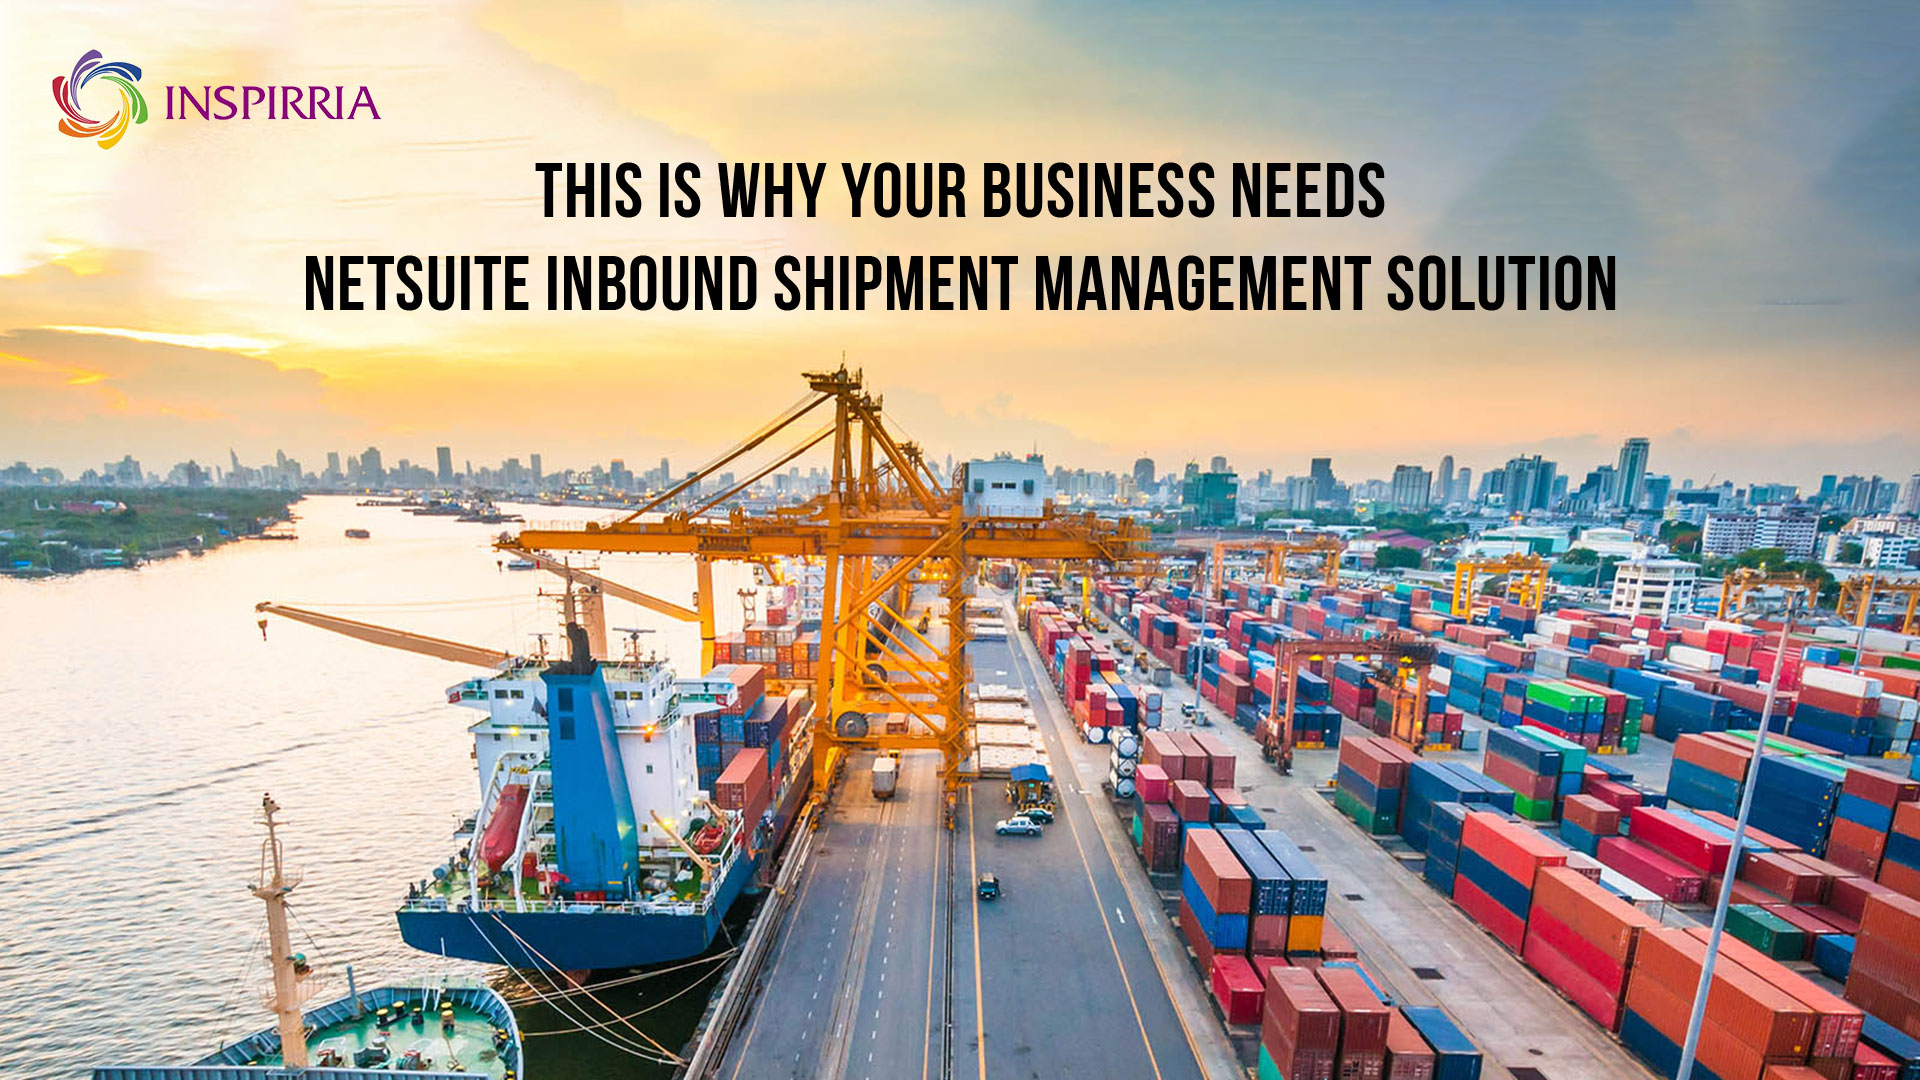 NetSuite Inbound Shipment Management, NetSuite Service Management, NetSuite ERP